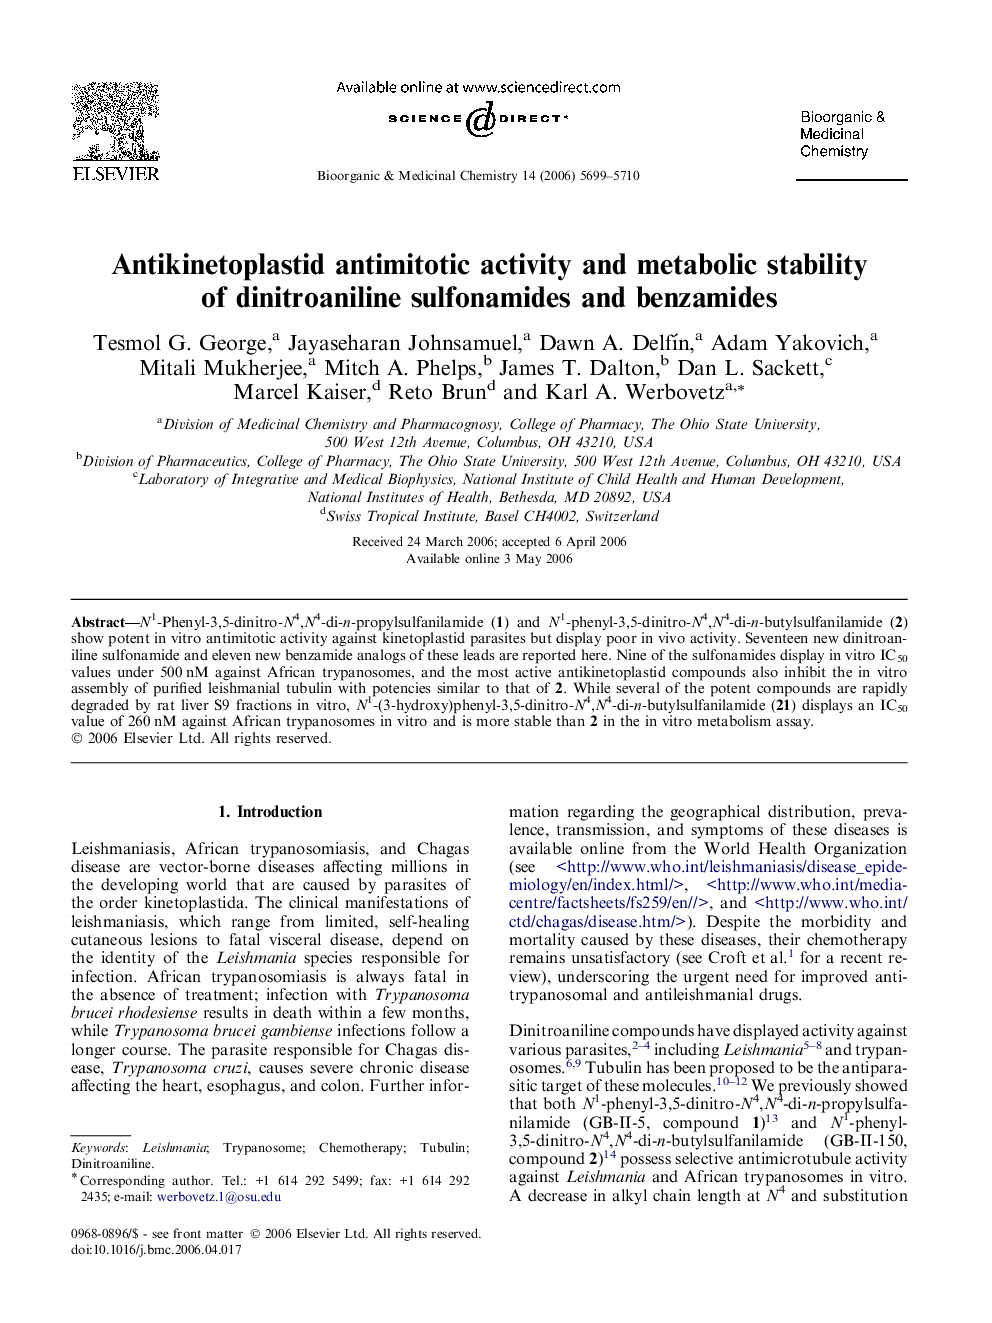 Antikinetoplastid antimitotic activity and metabolic stability of dinitroaniline sulfonamides and benzamides